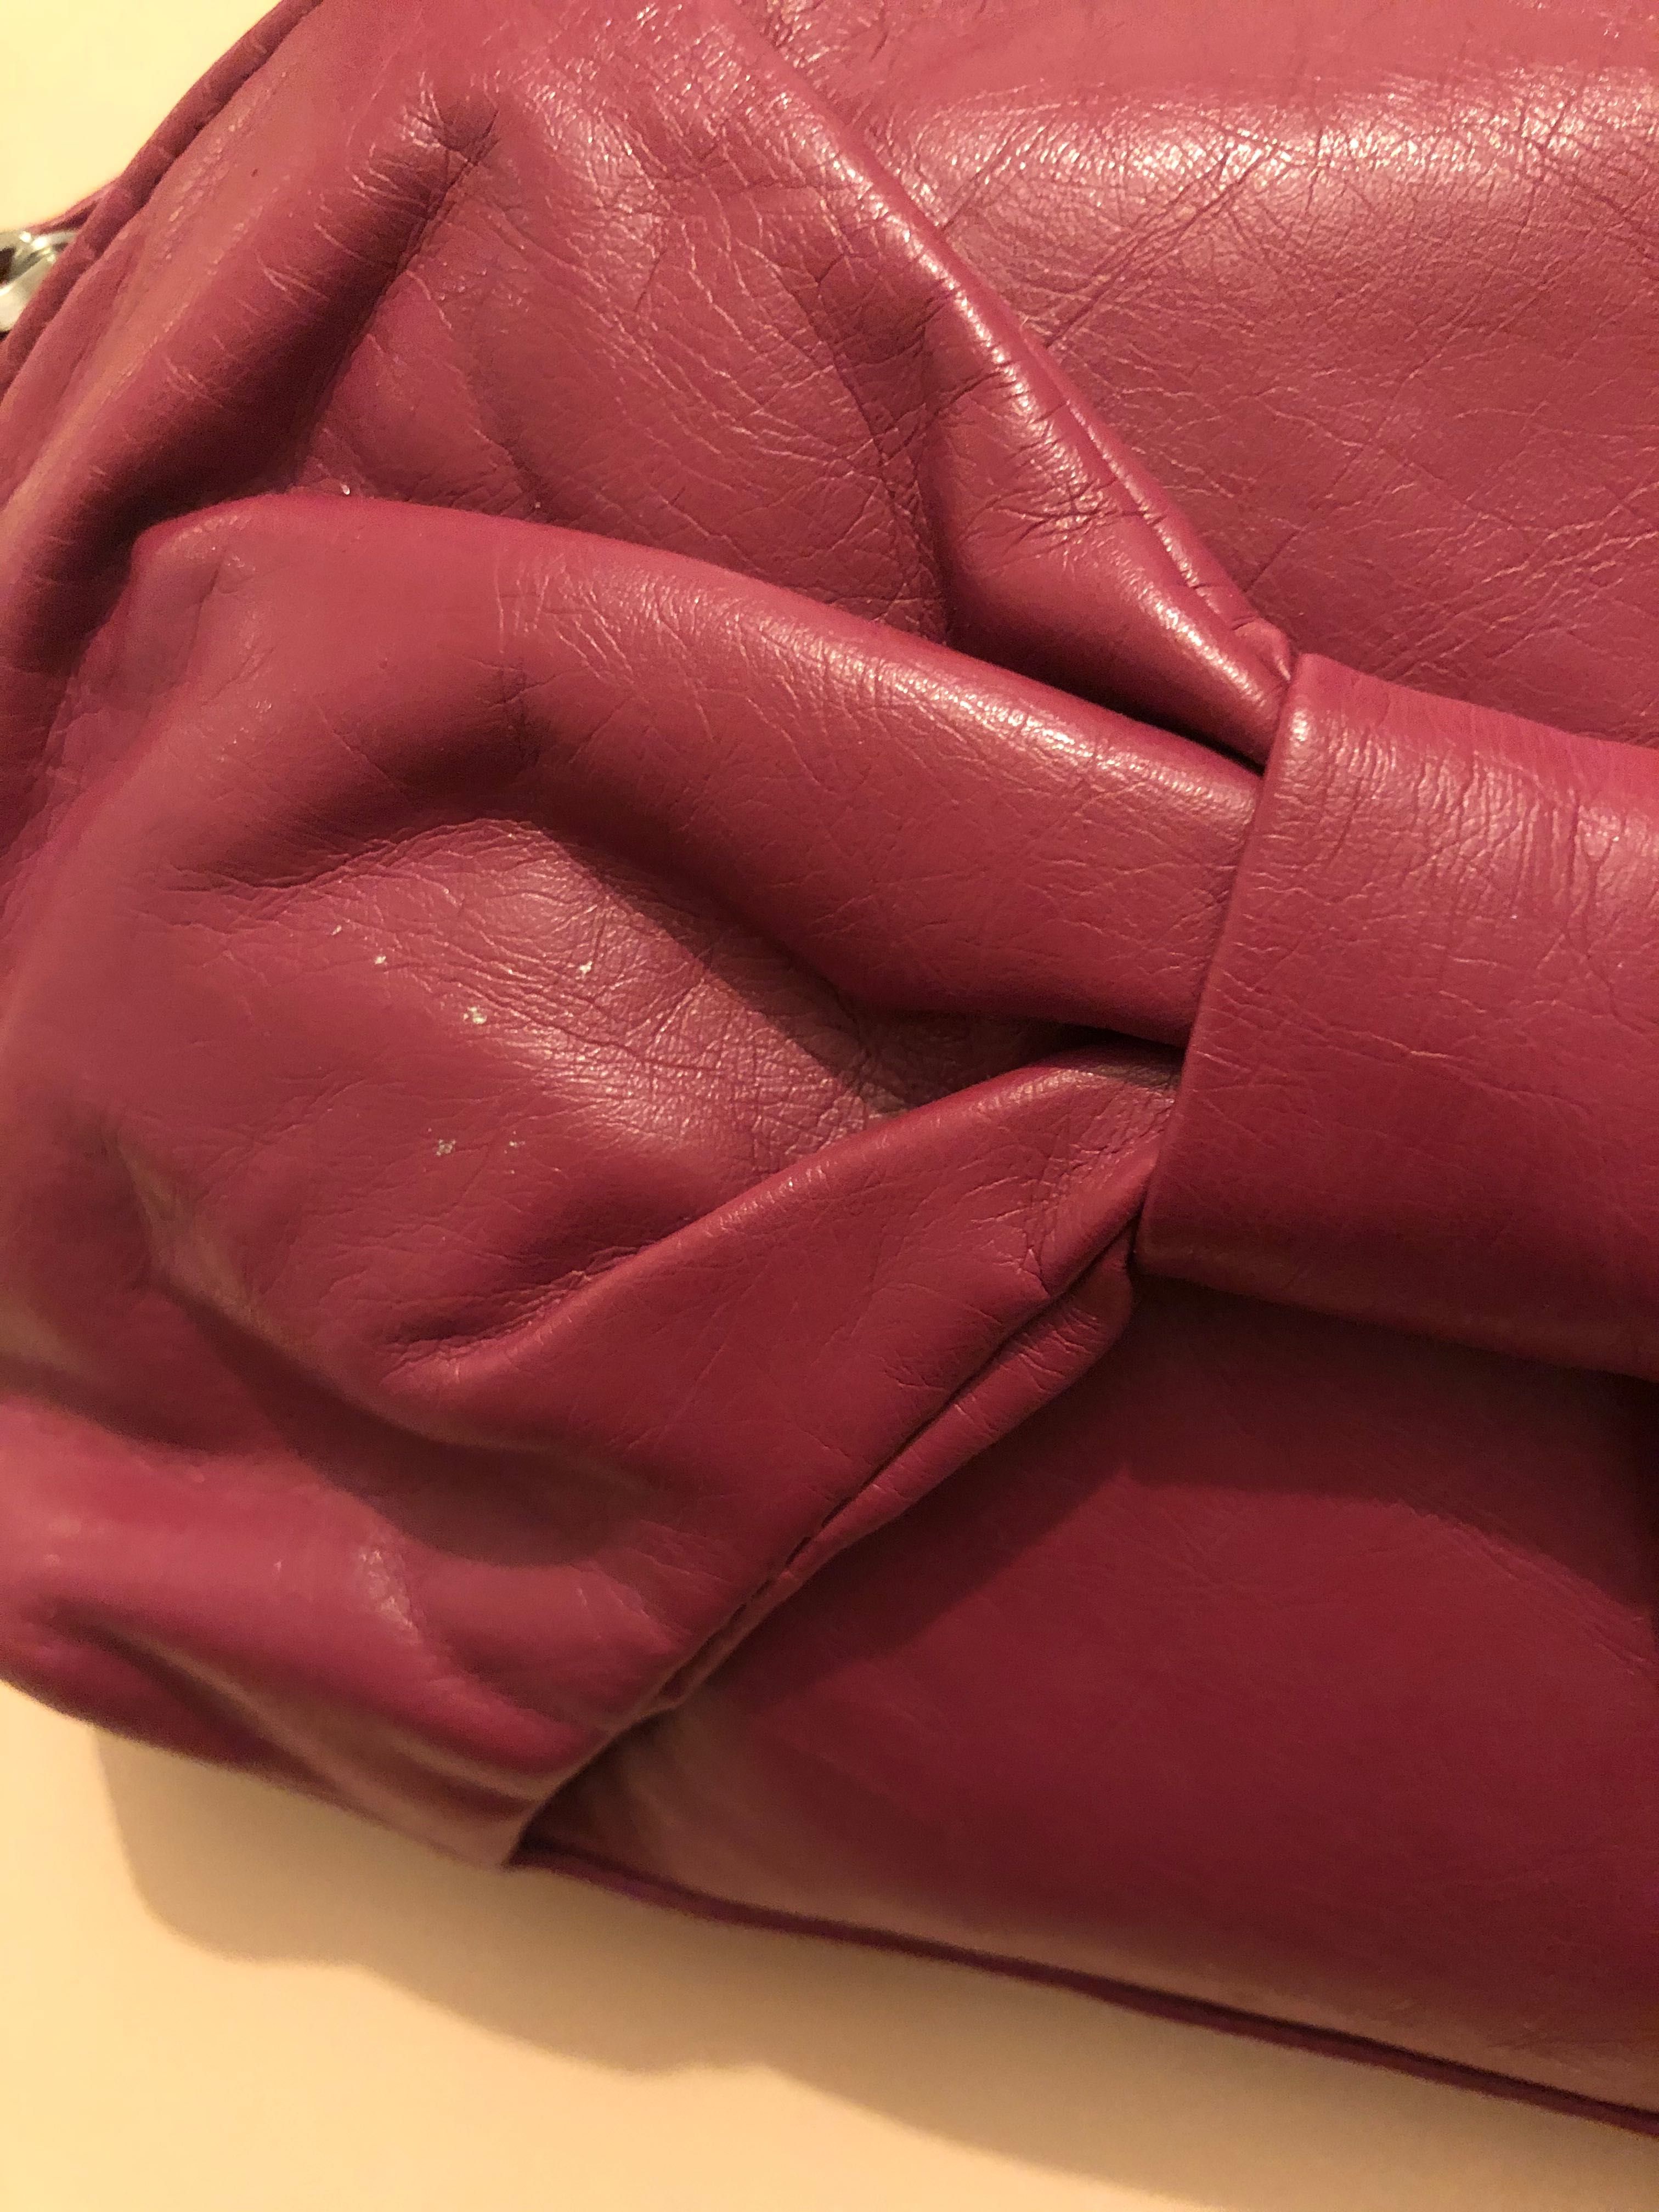 Koktajlowa torebka ciemno-różowa